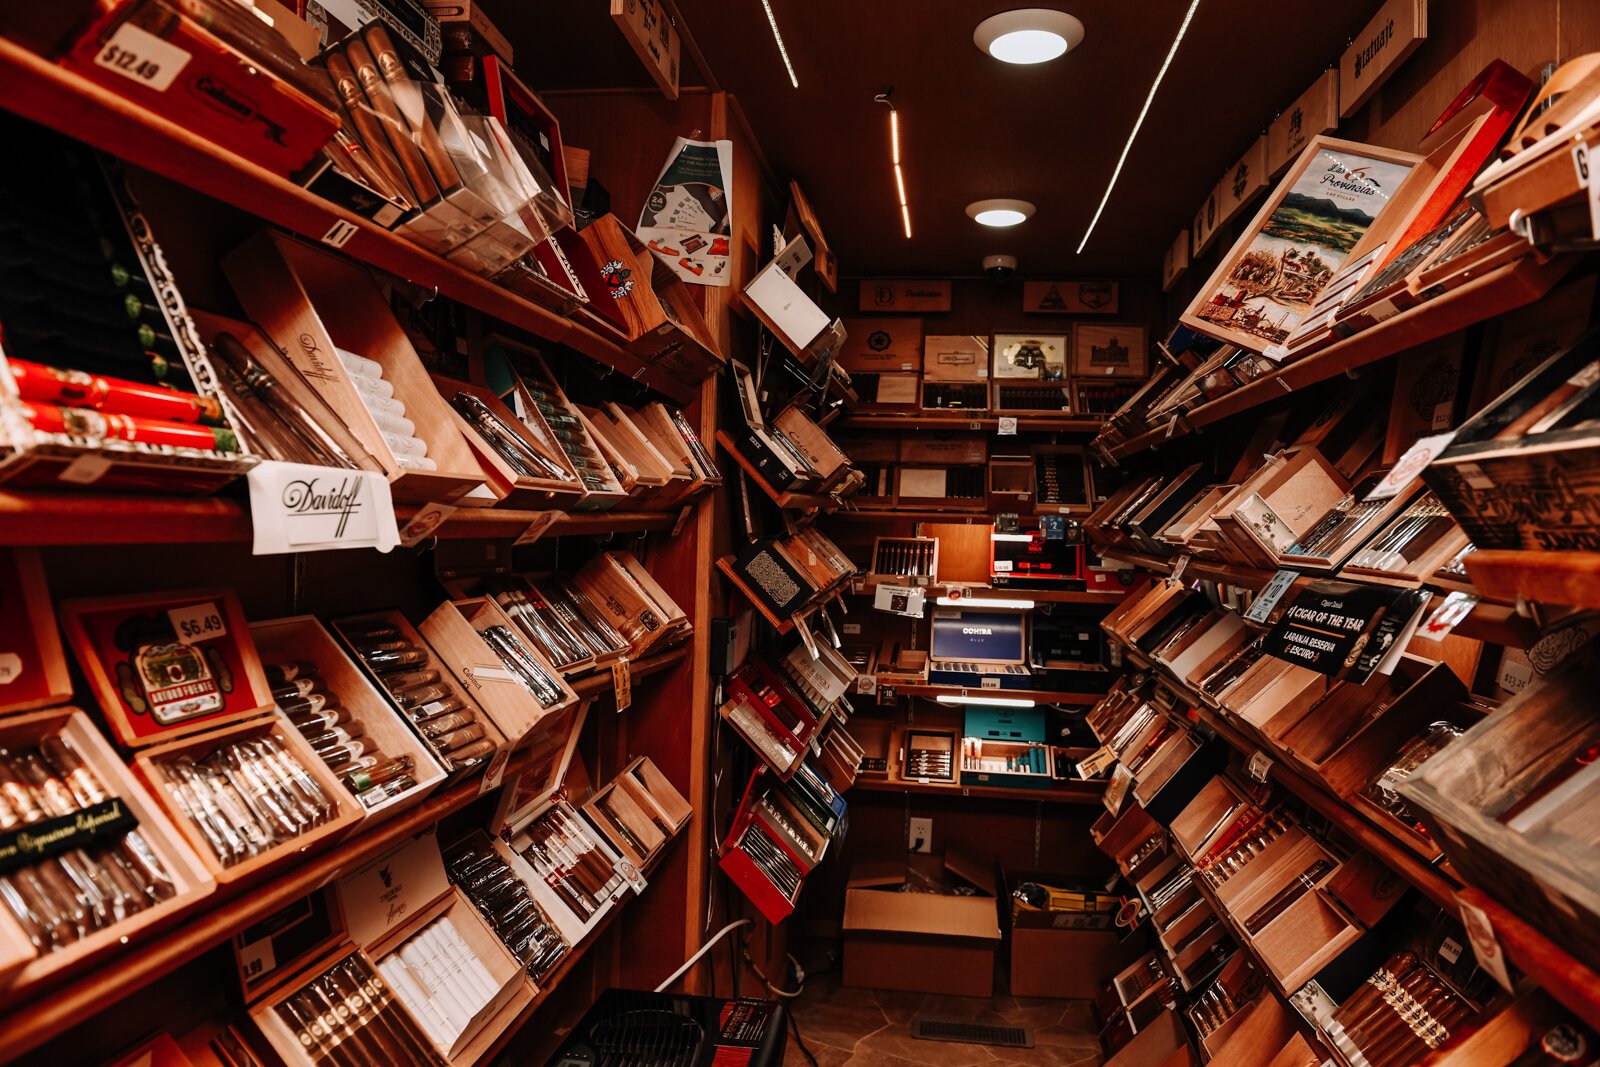 The humidor cigar room features a variety of cigars at Rudy's Cigar Shop.